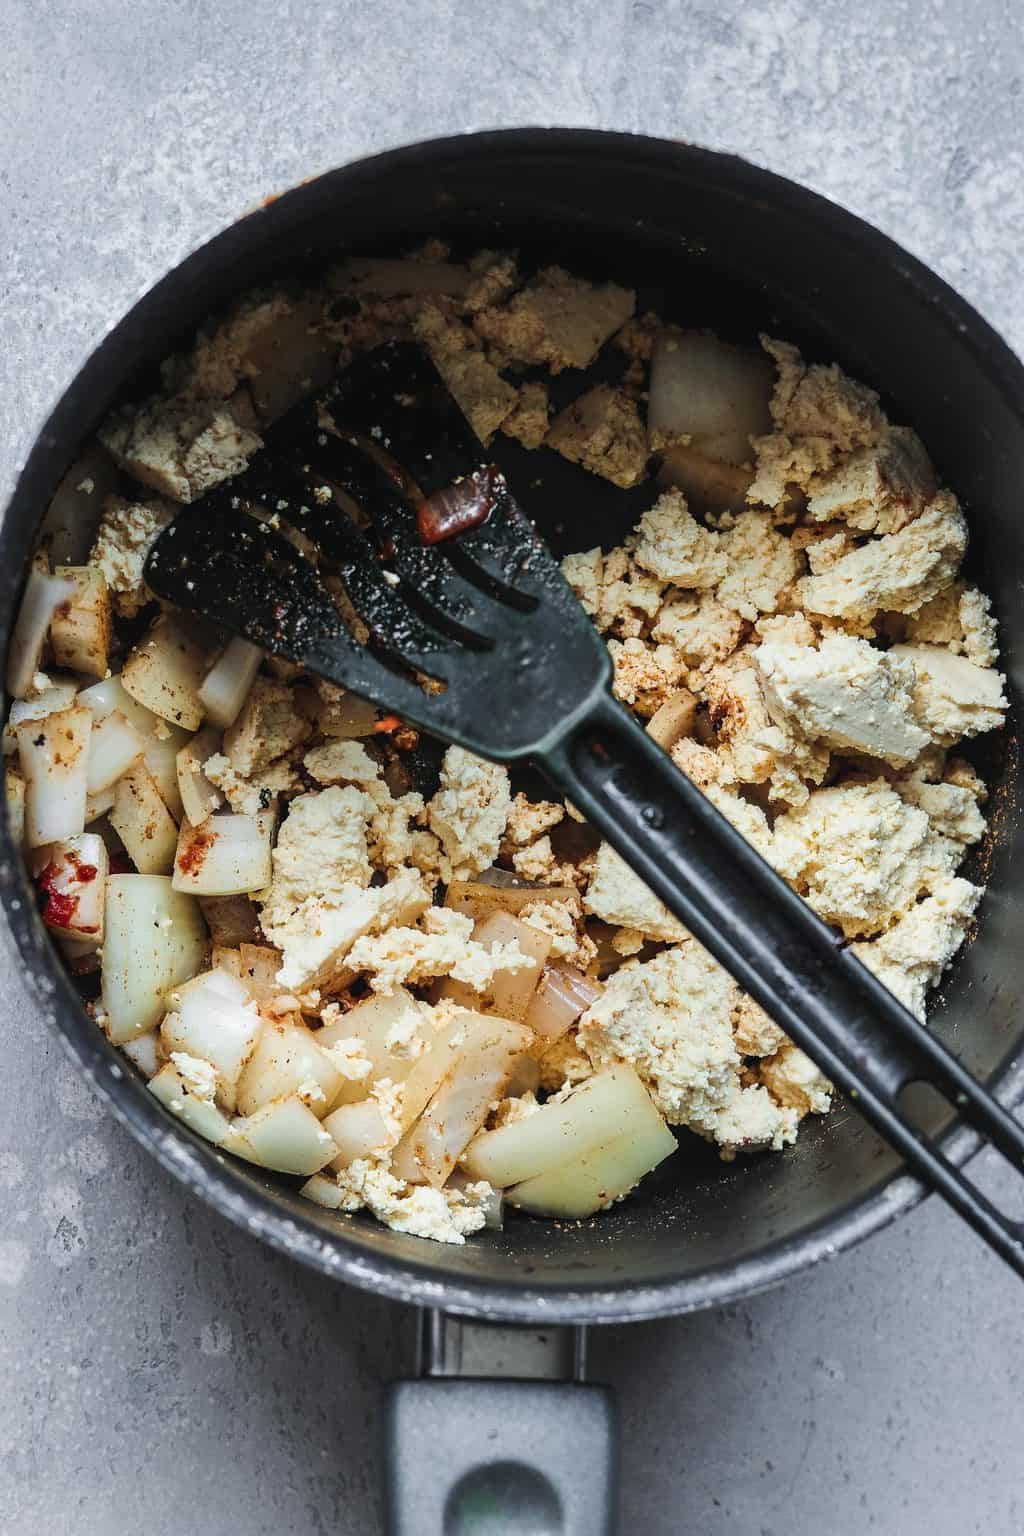 Tofu and onion in a saucepan